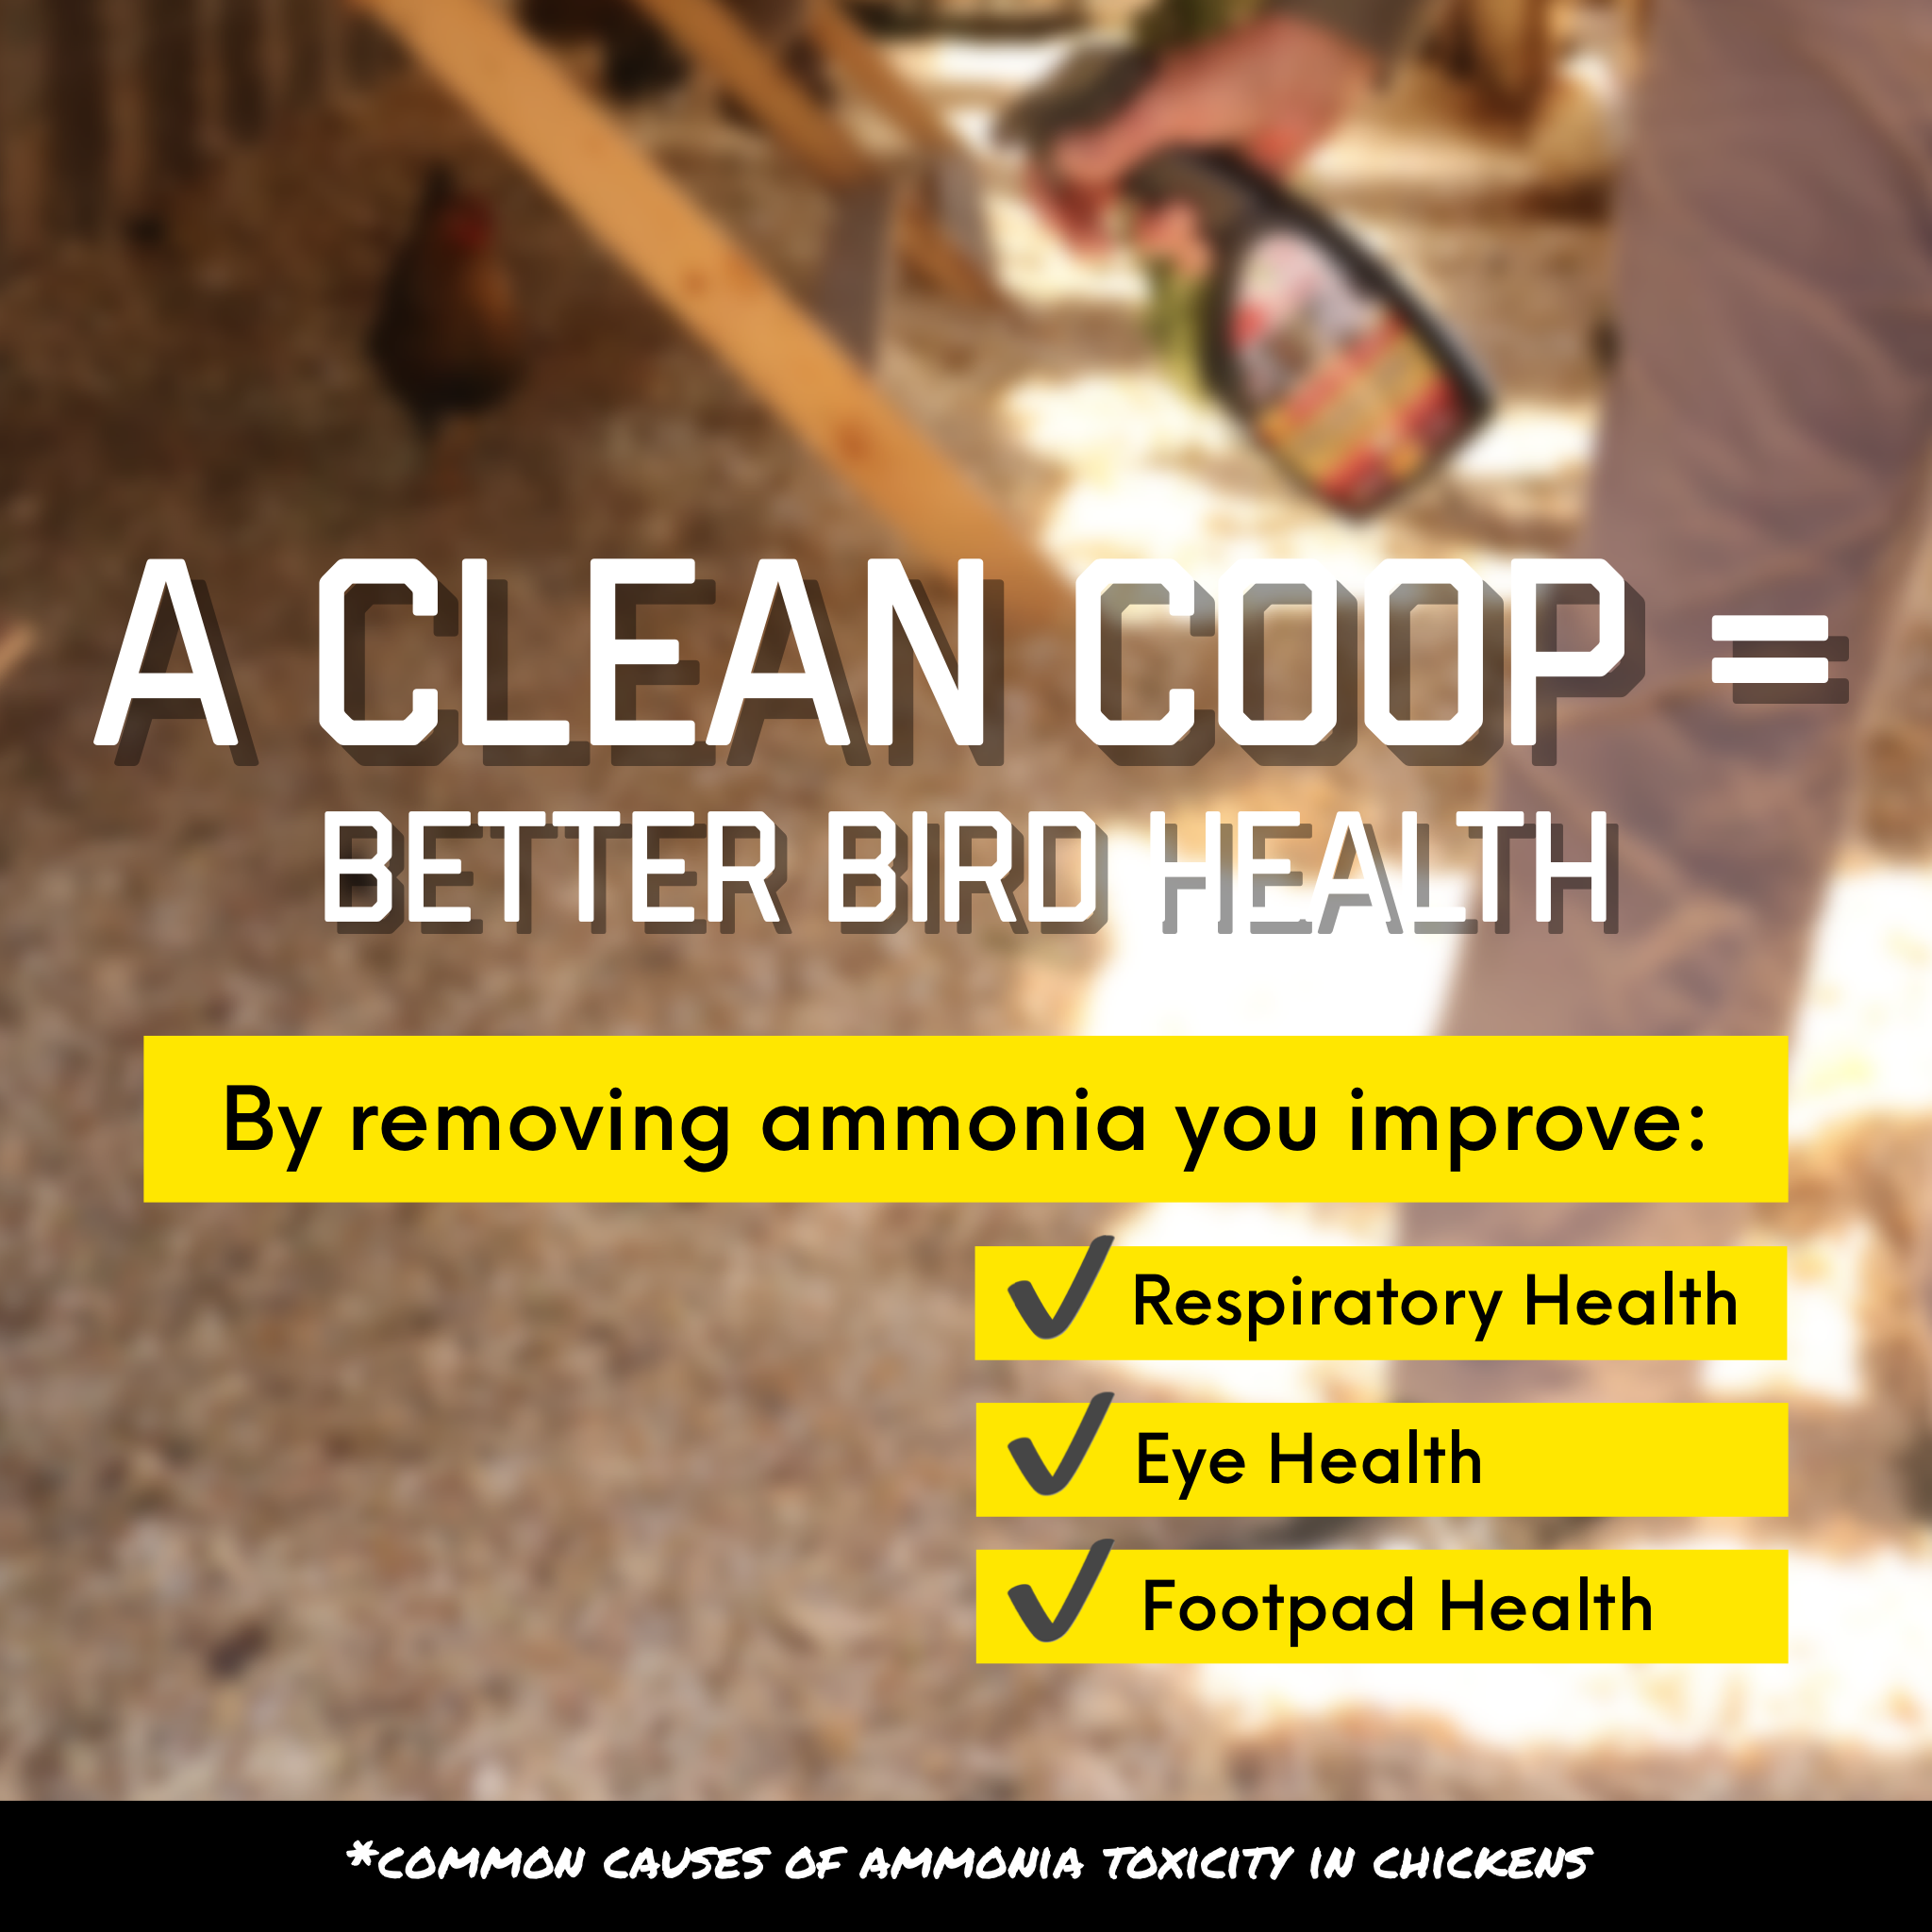 Chick Fresh - Eliminate Chicken Coop & Brooder Odor (24 oz) Works Inside & Outside the House!